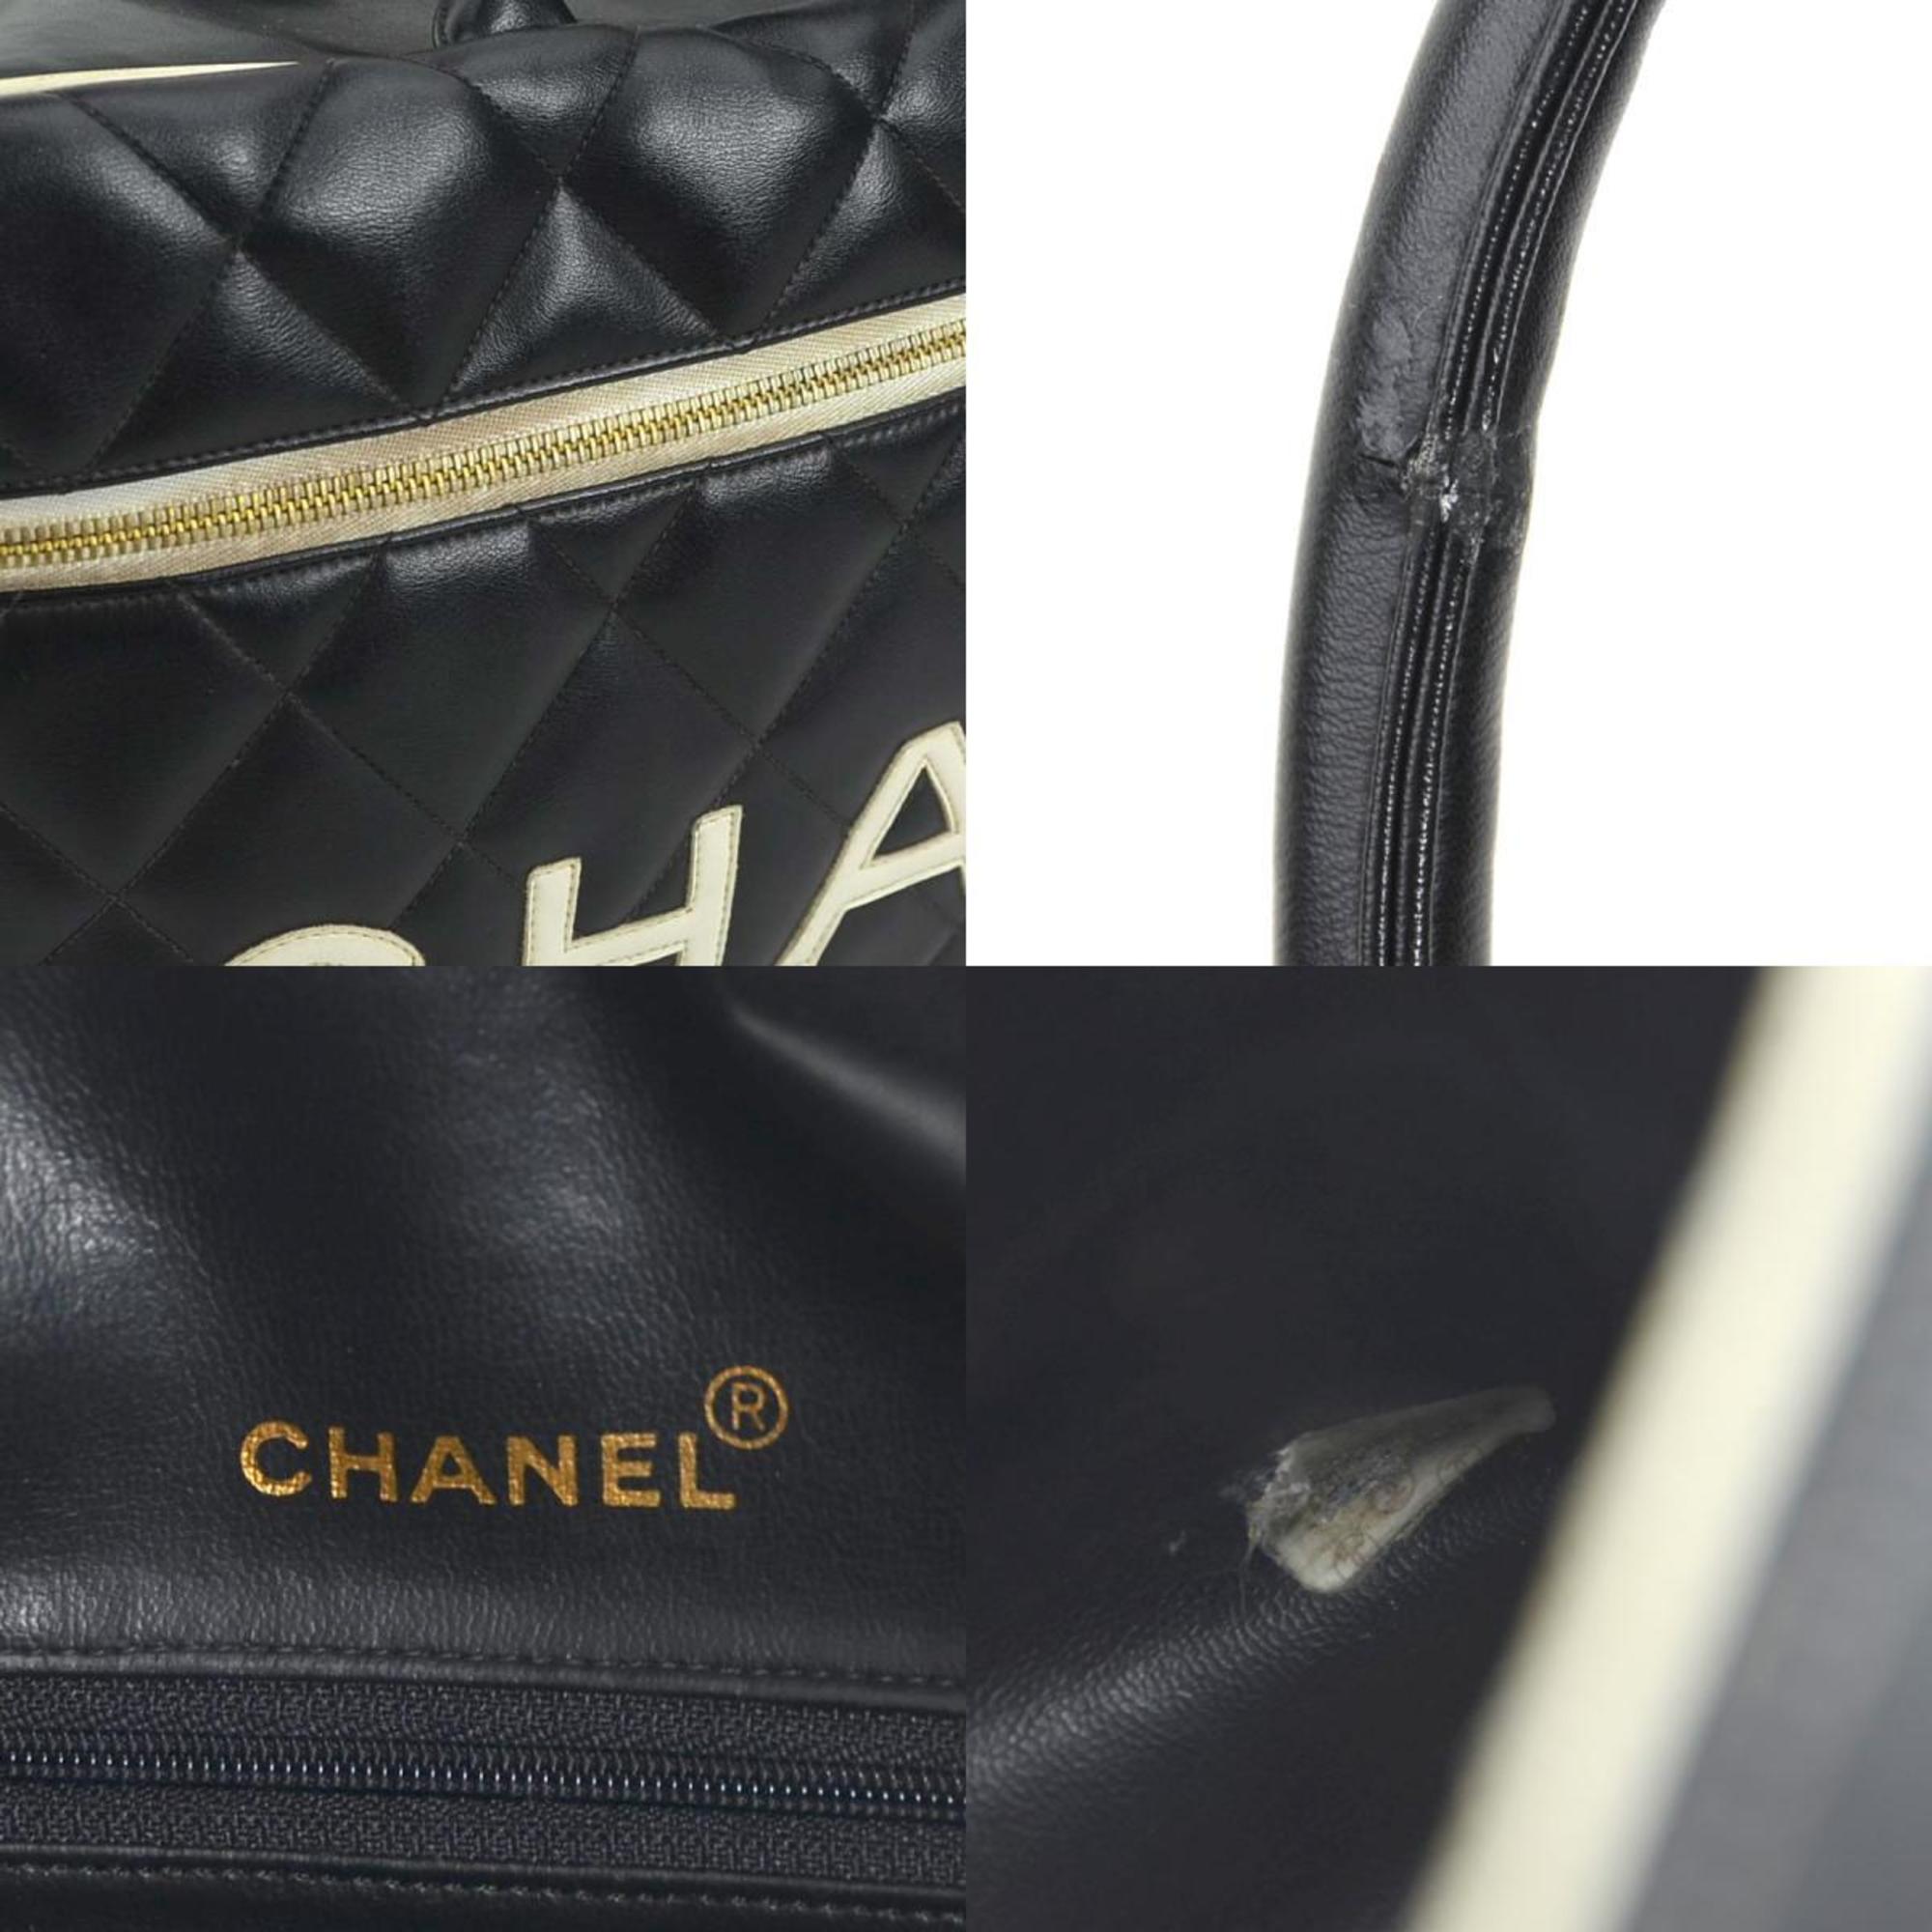 CHANEL Handbag Boston Bag Leather Black x White Unisex A05943 r9996a